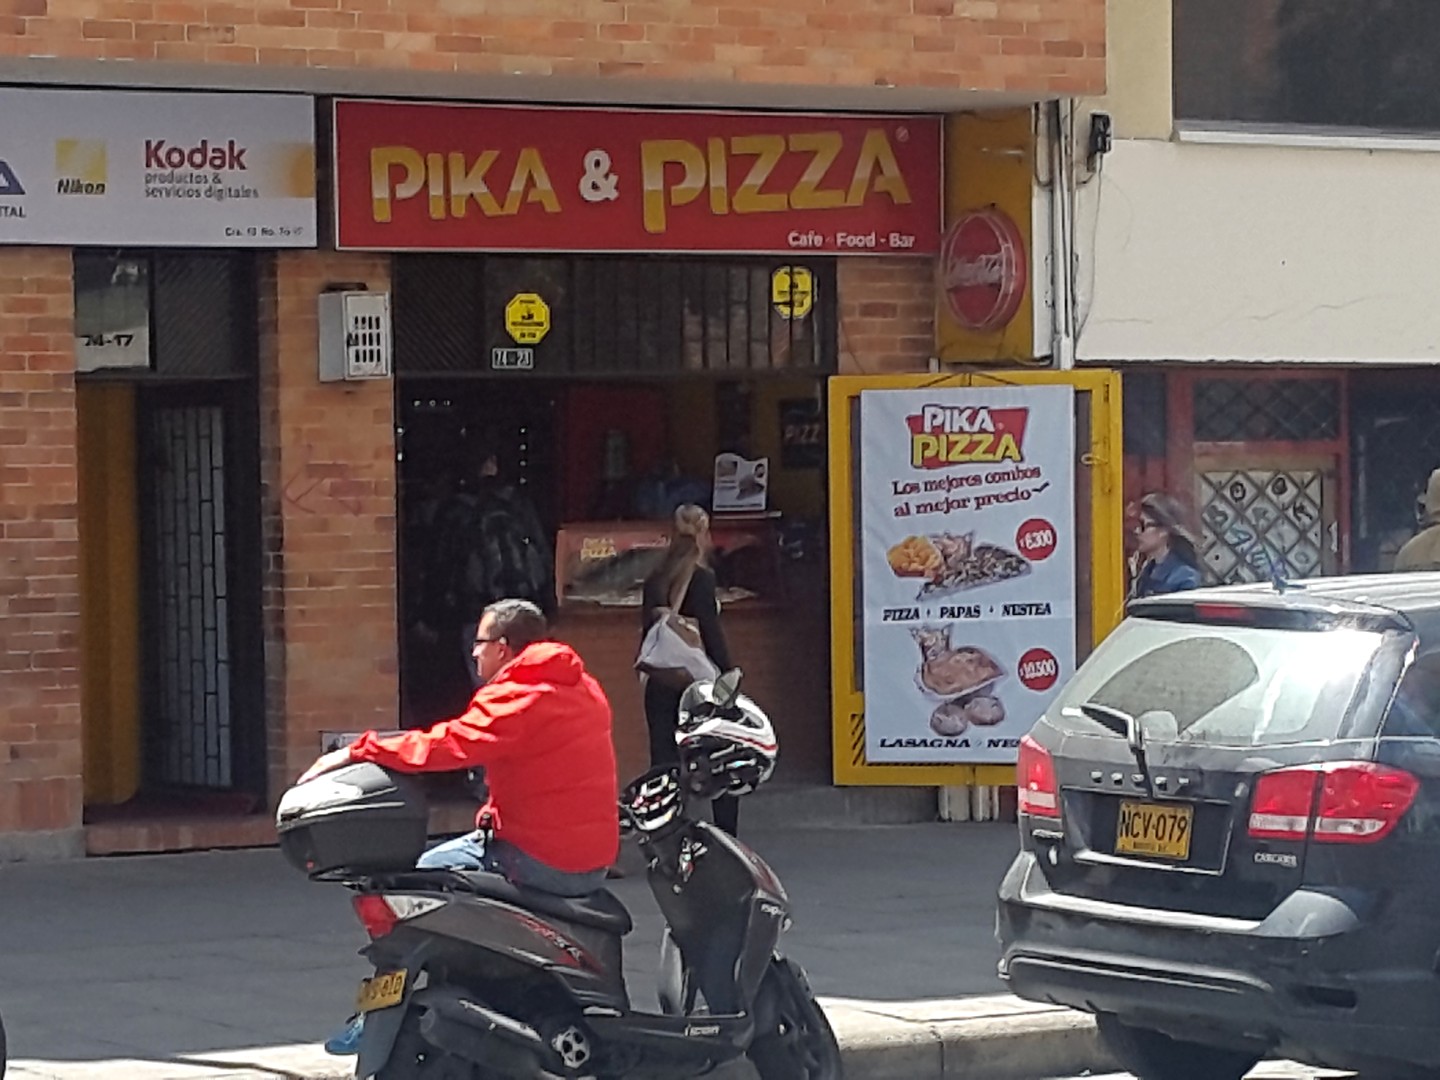 Pika & Pizza